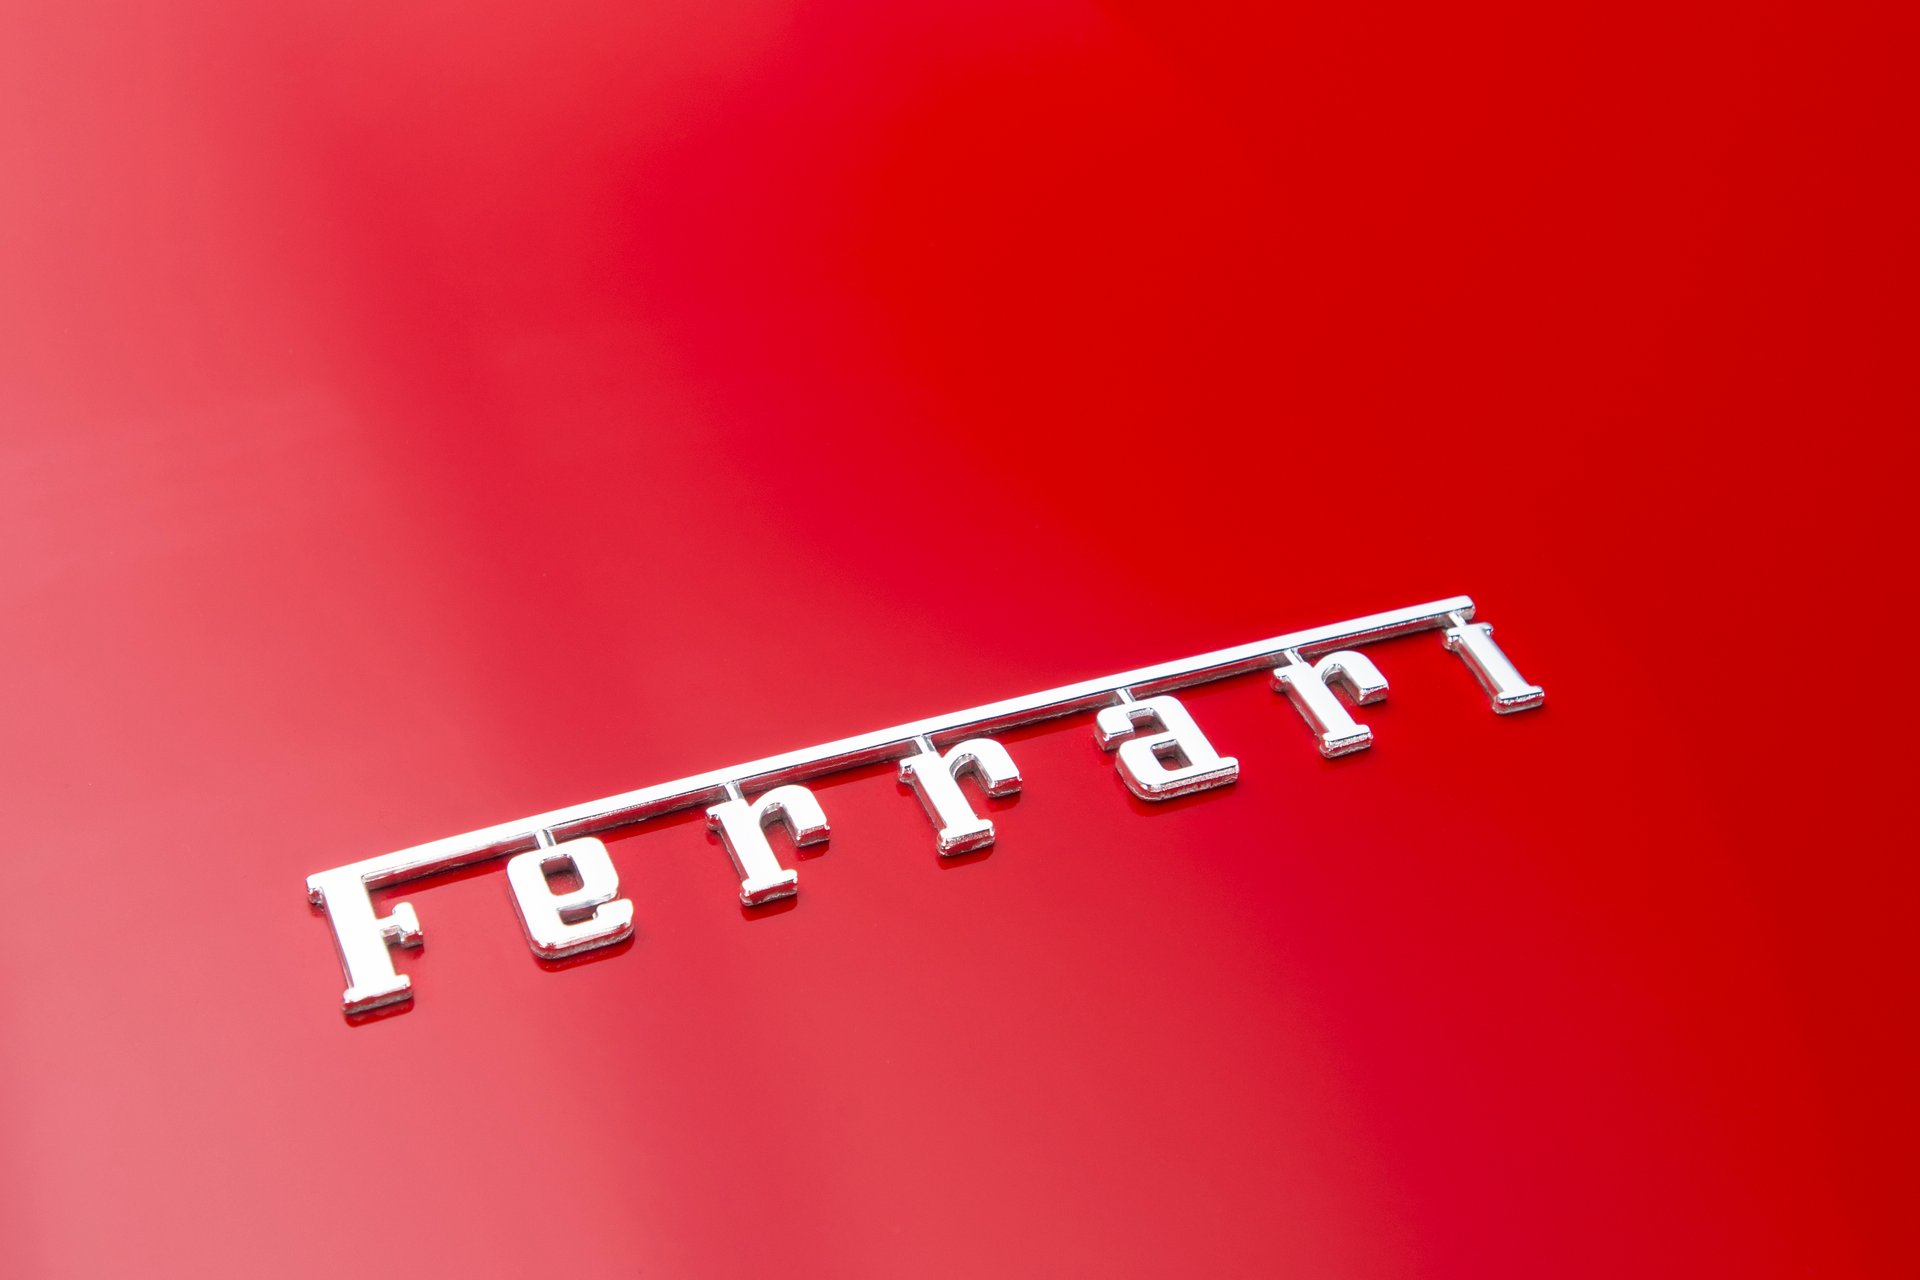 For Sale 2010 Ferrari California